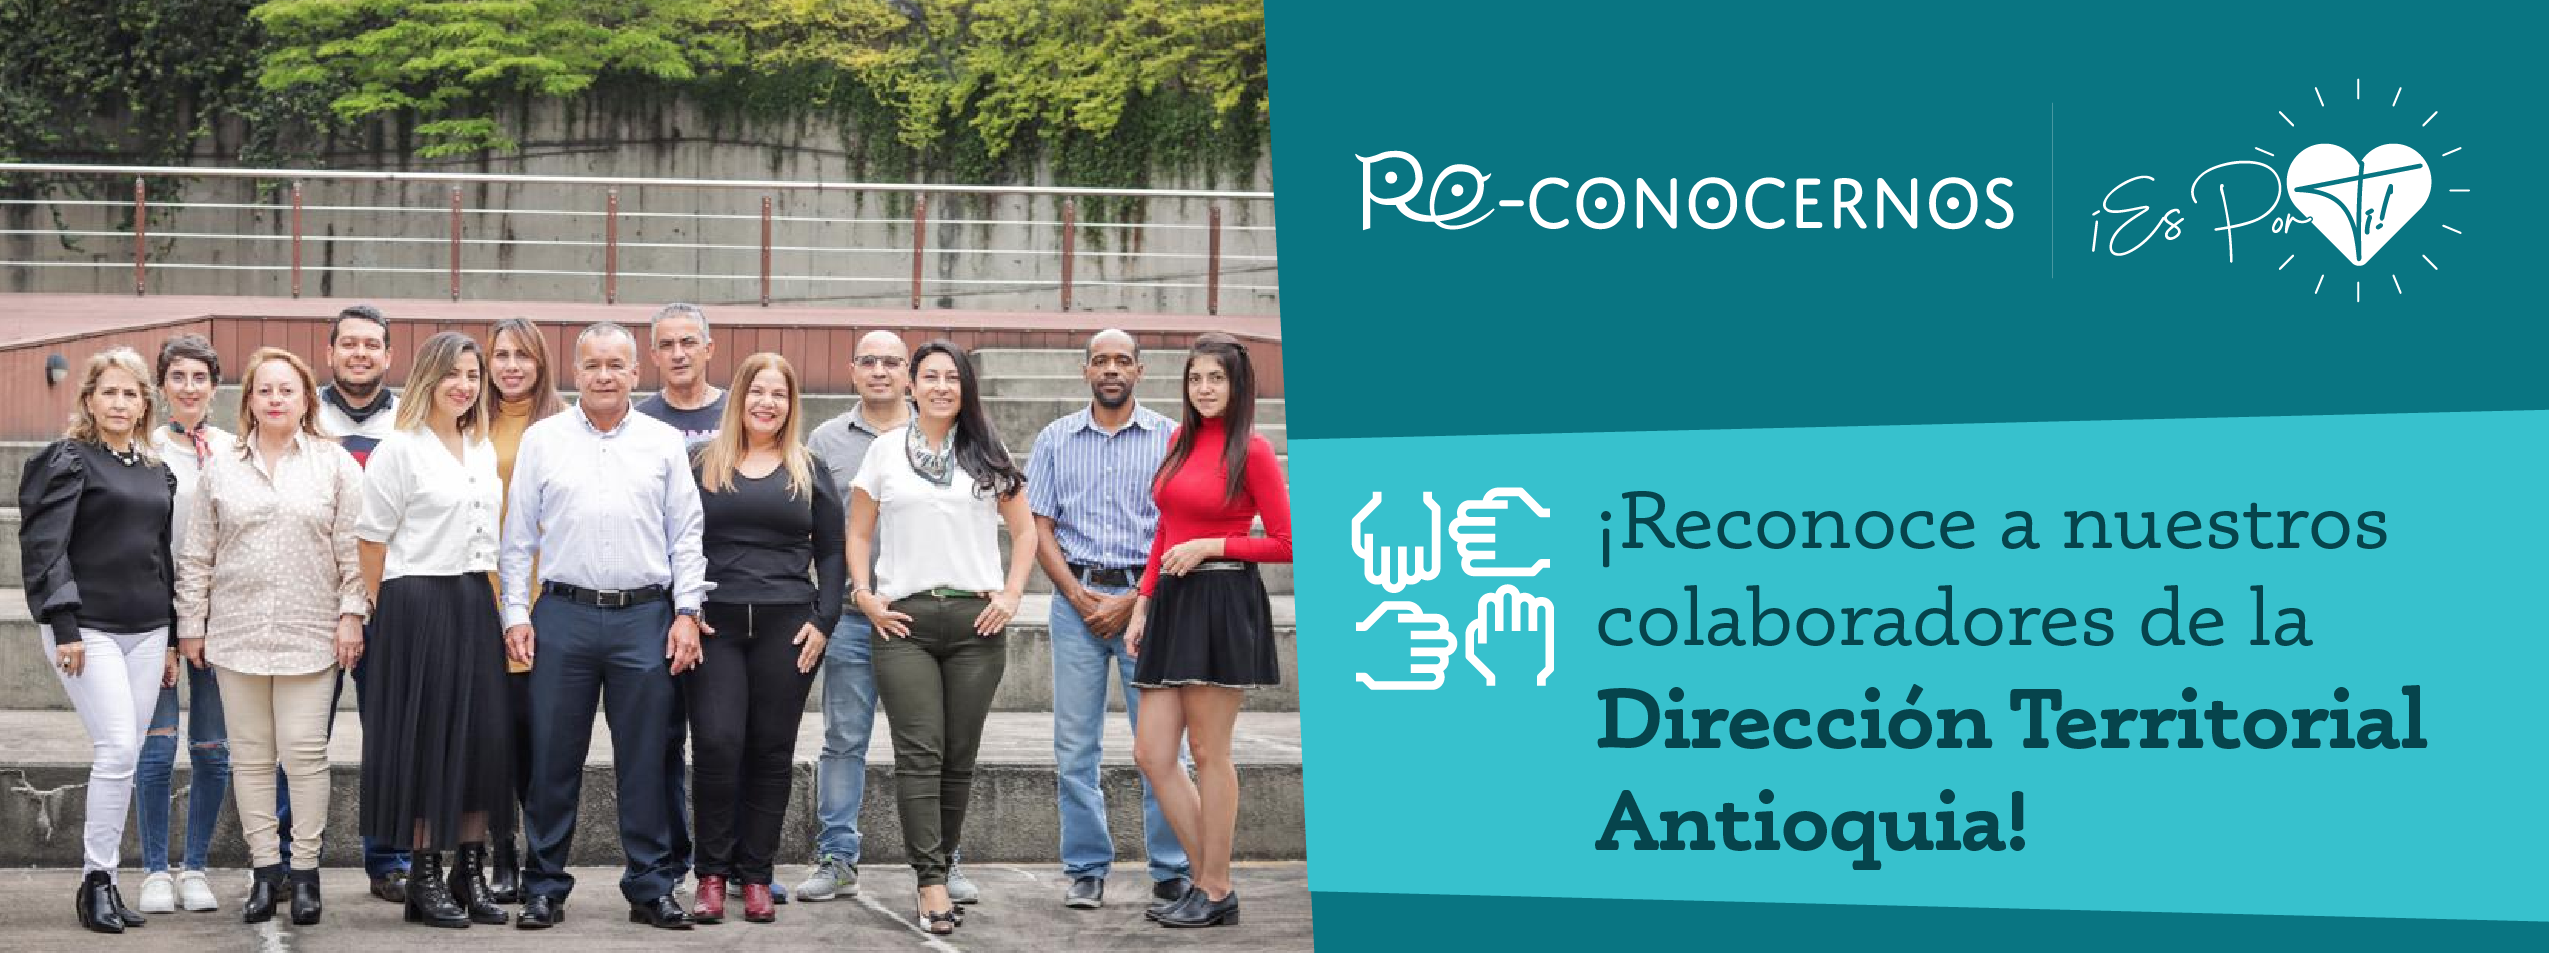 01-Reconocernos_DT Antioquia_Banner